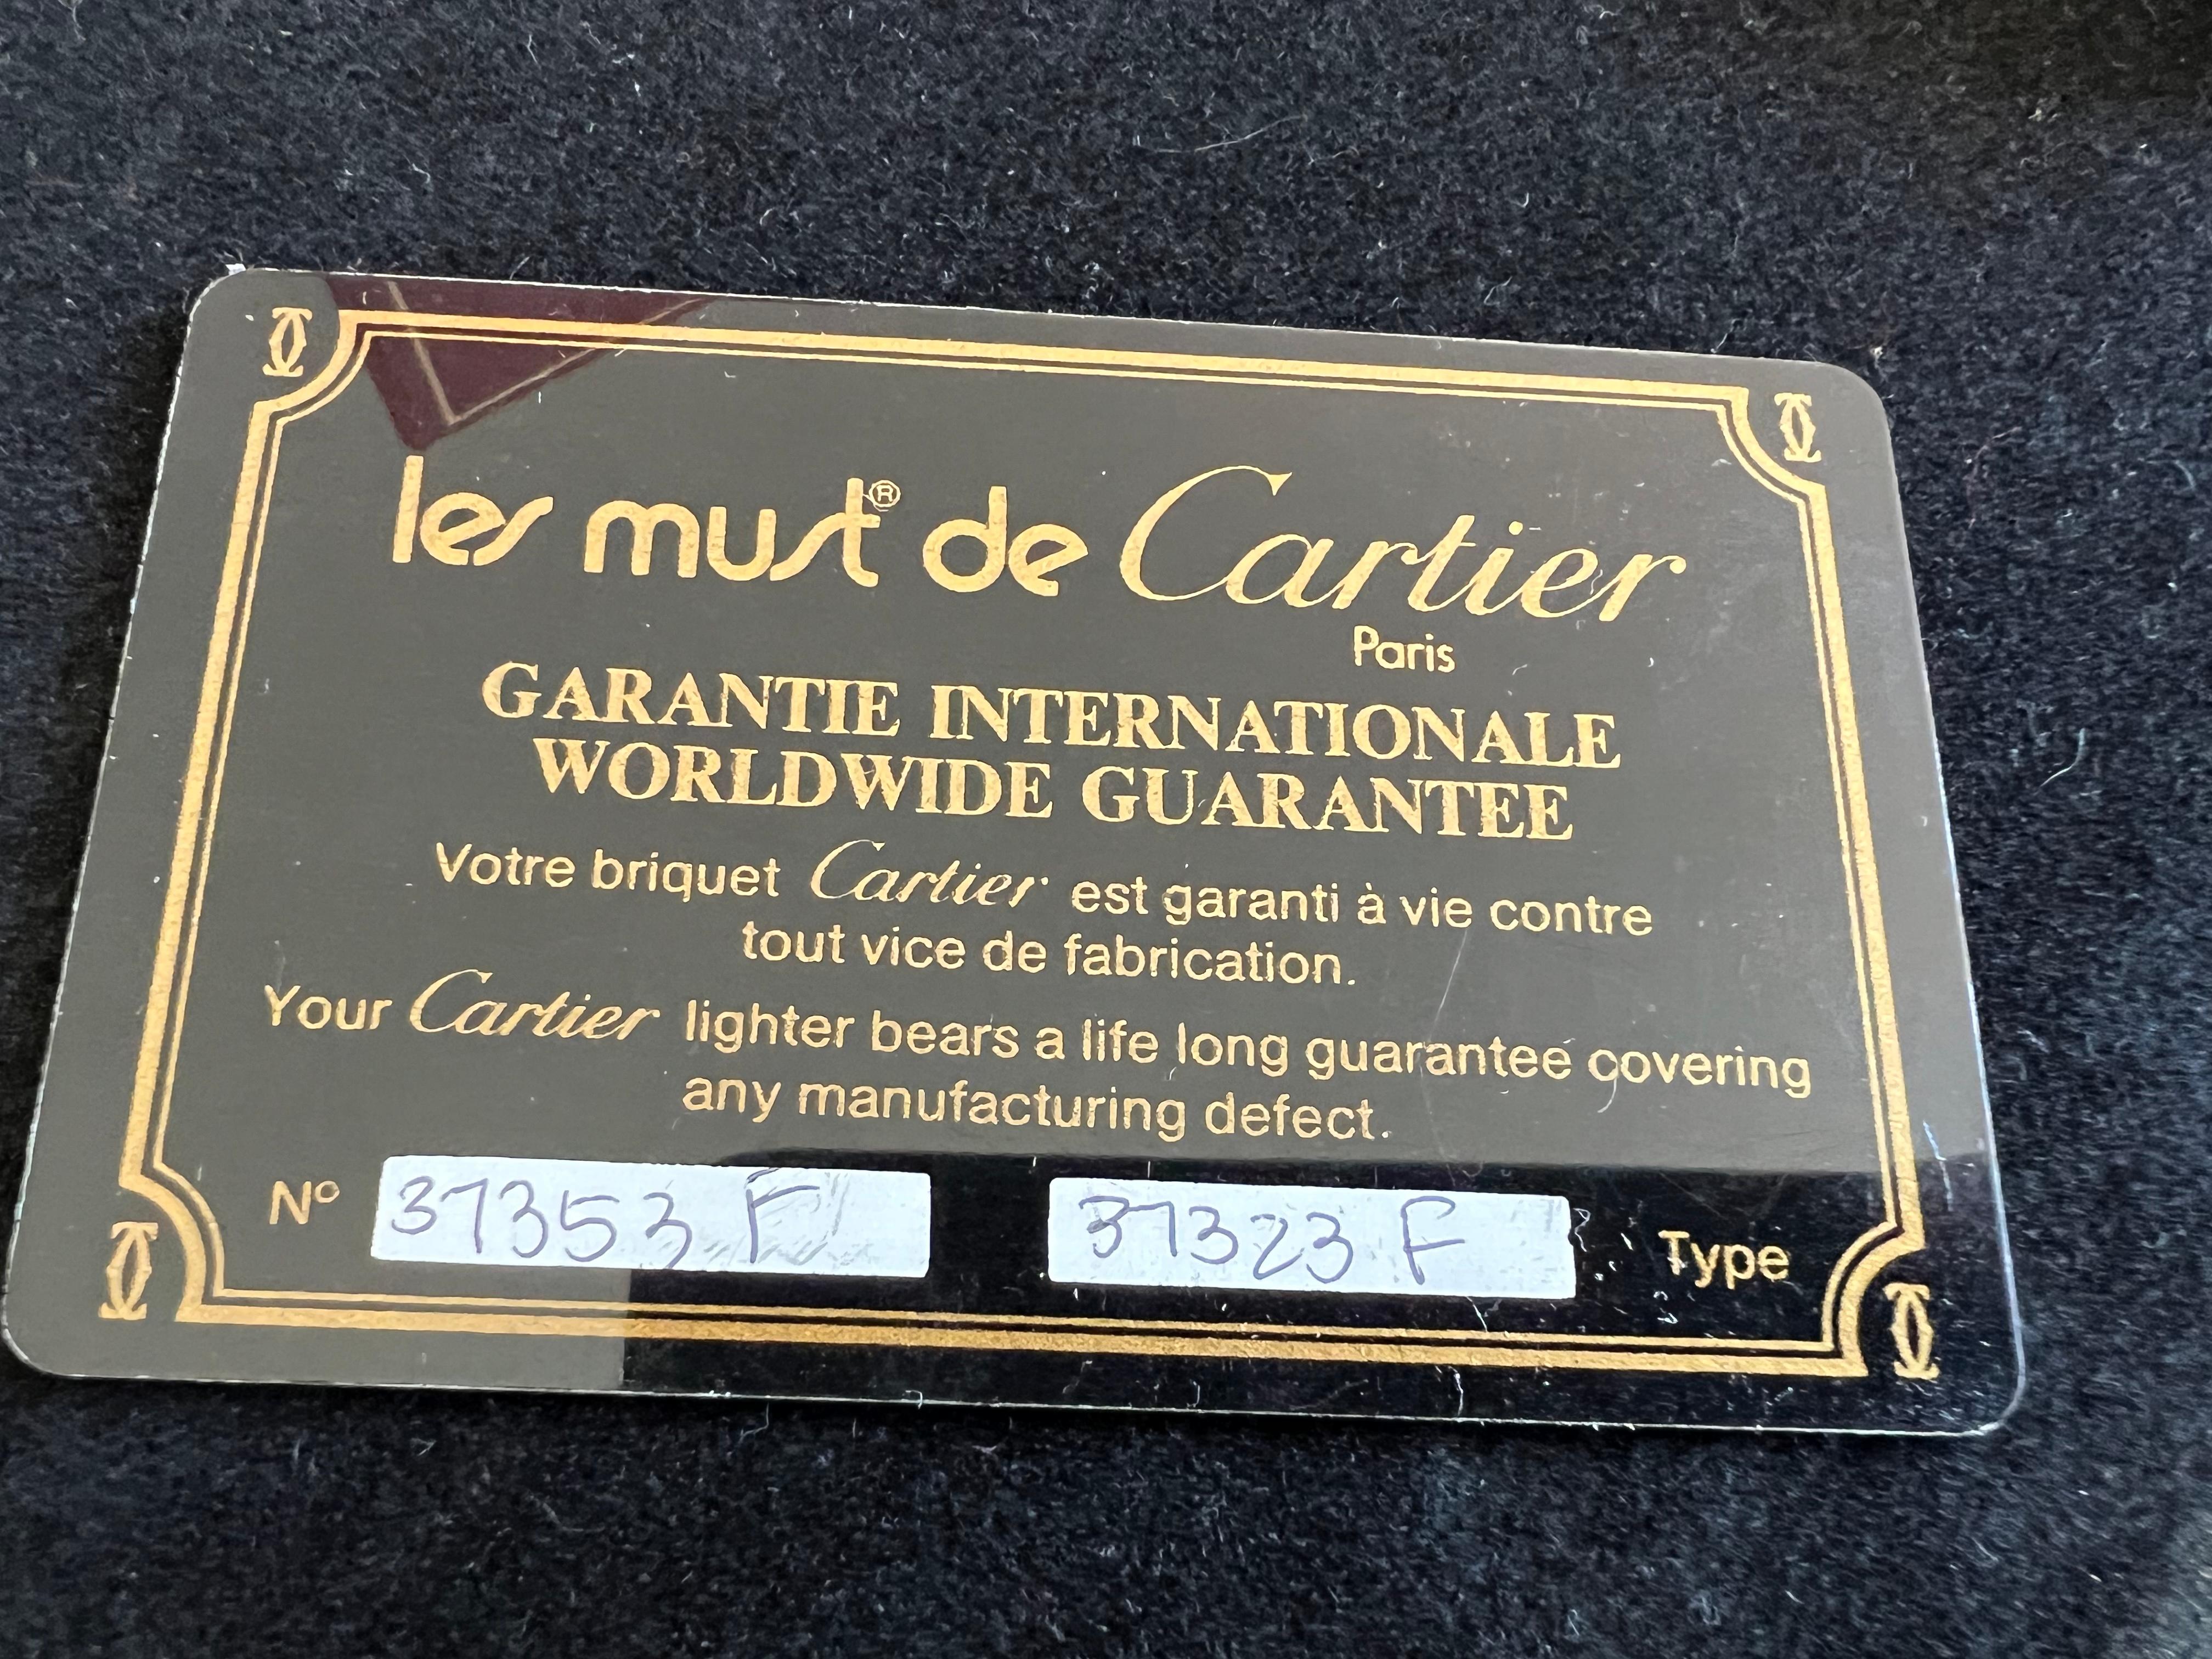 A Les Must De Cartier Paris 18k gold plated lighter 3